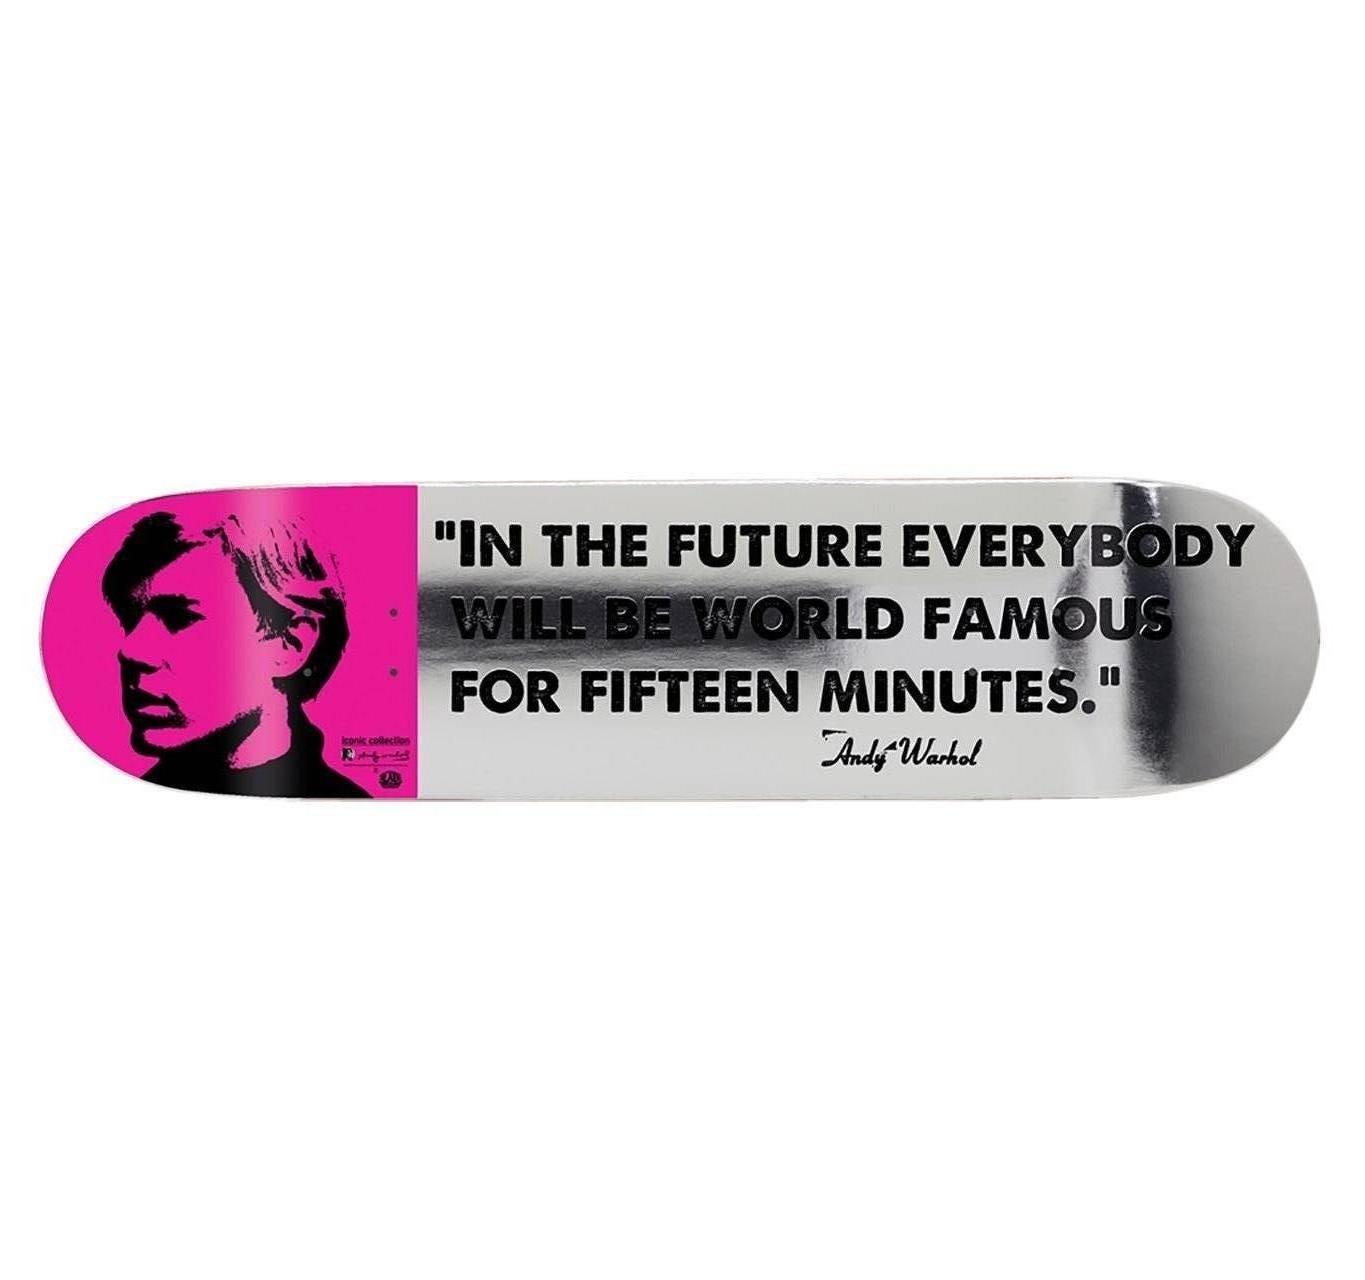 Warhol 15 Minutes of Fame skateboard deck (Warhol self portrait - Art by (after) Andy Warhol